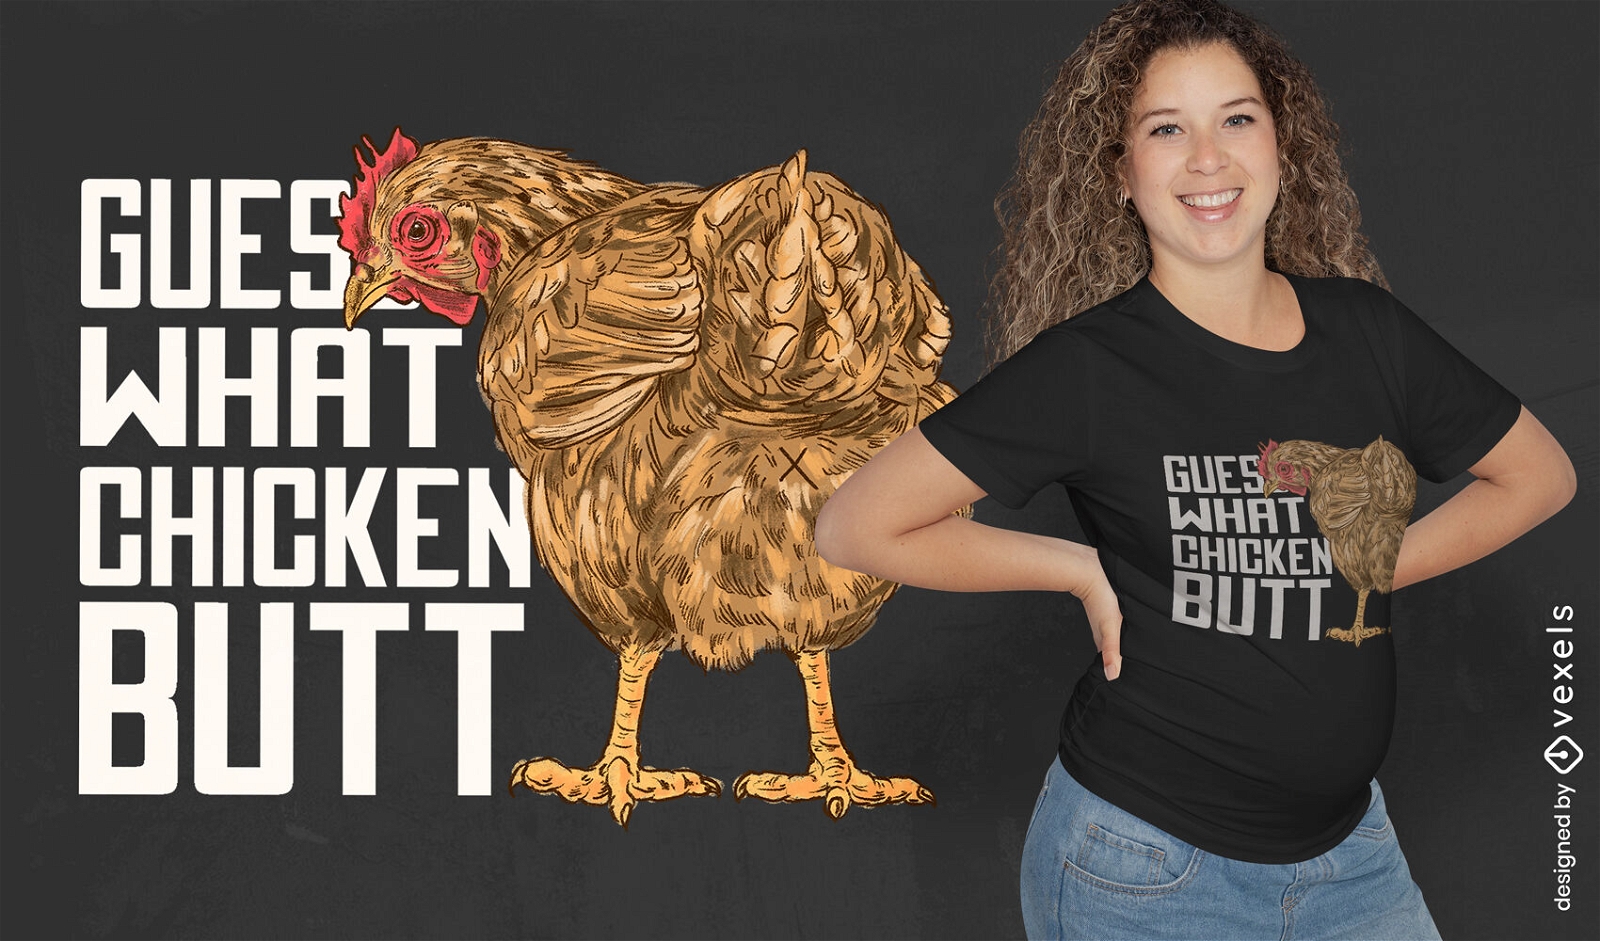 Chicken butt quote t-shirt design